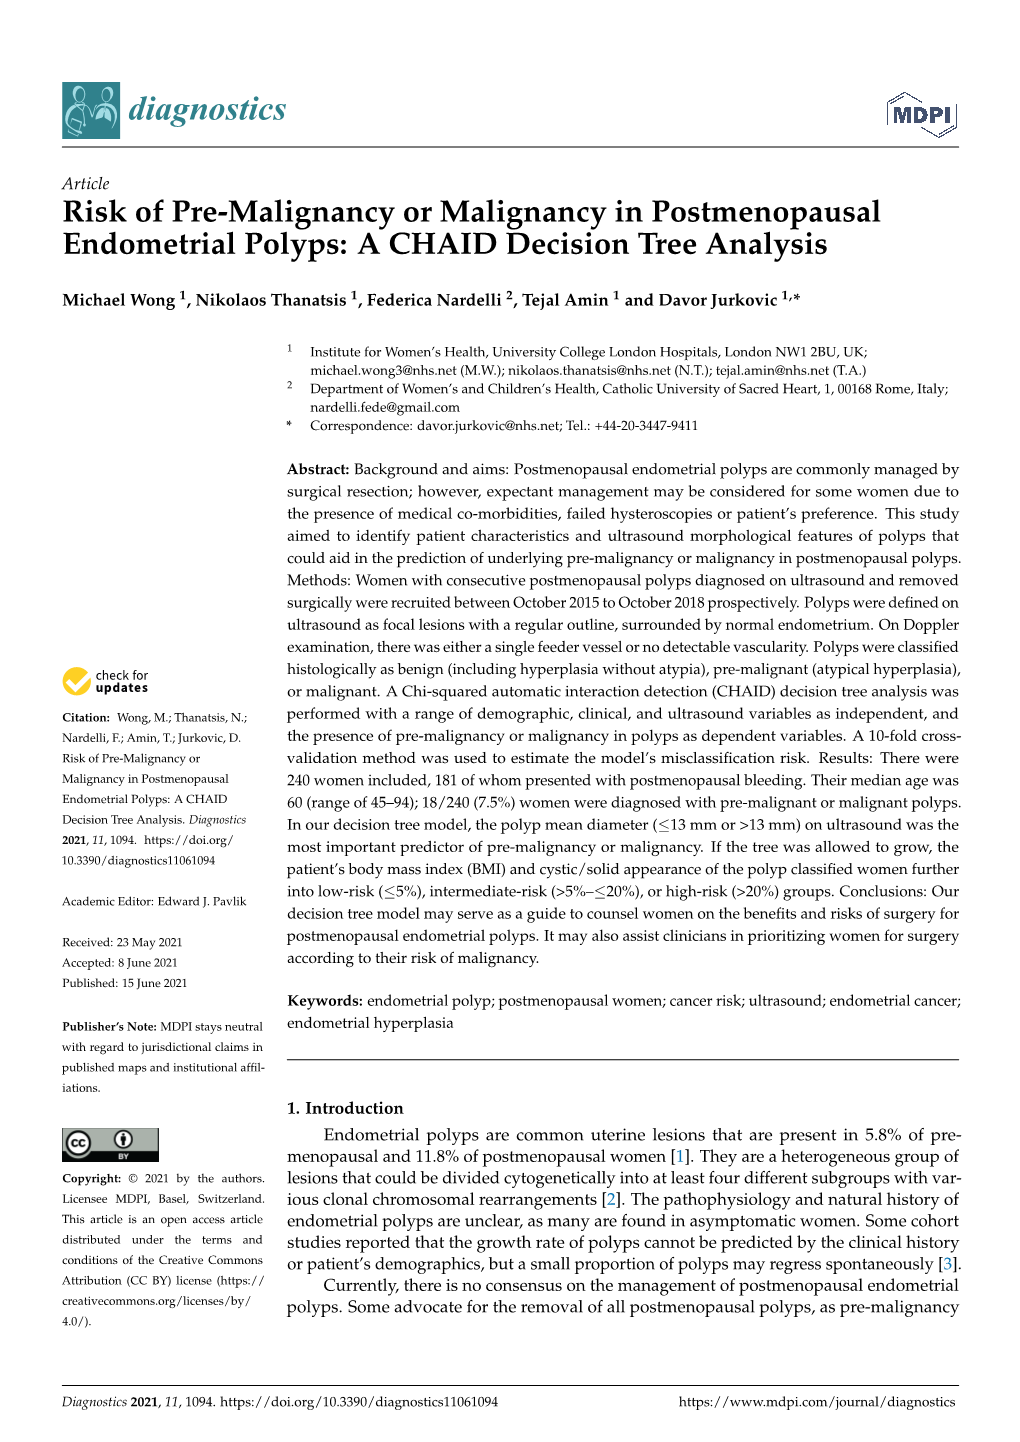 Risk of Pre-Malignancy Or Malignancy in Postmenopausal Endometrial Polyps: a CHAID Decision Tree Analysis